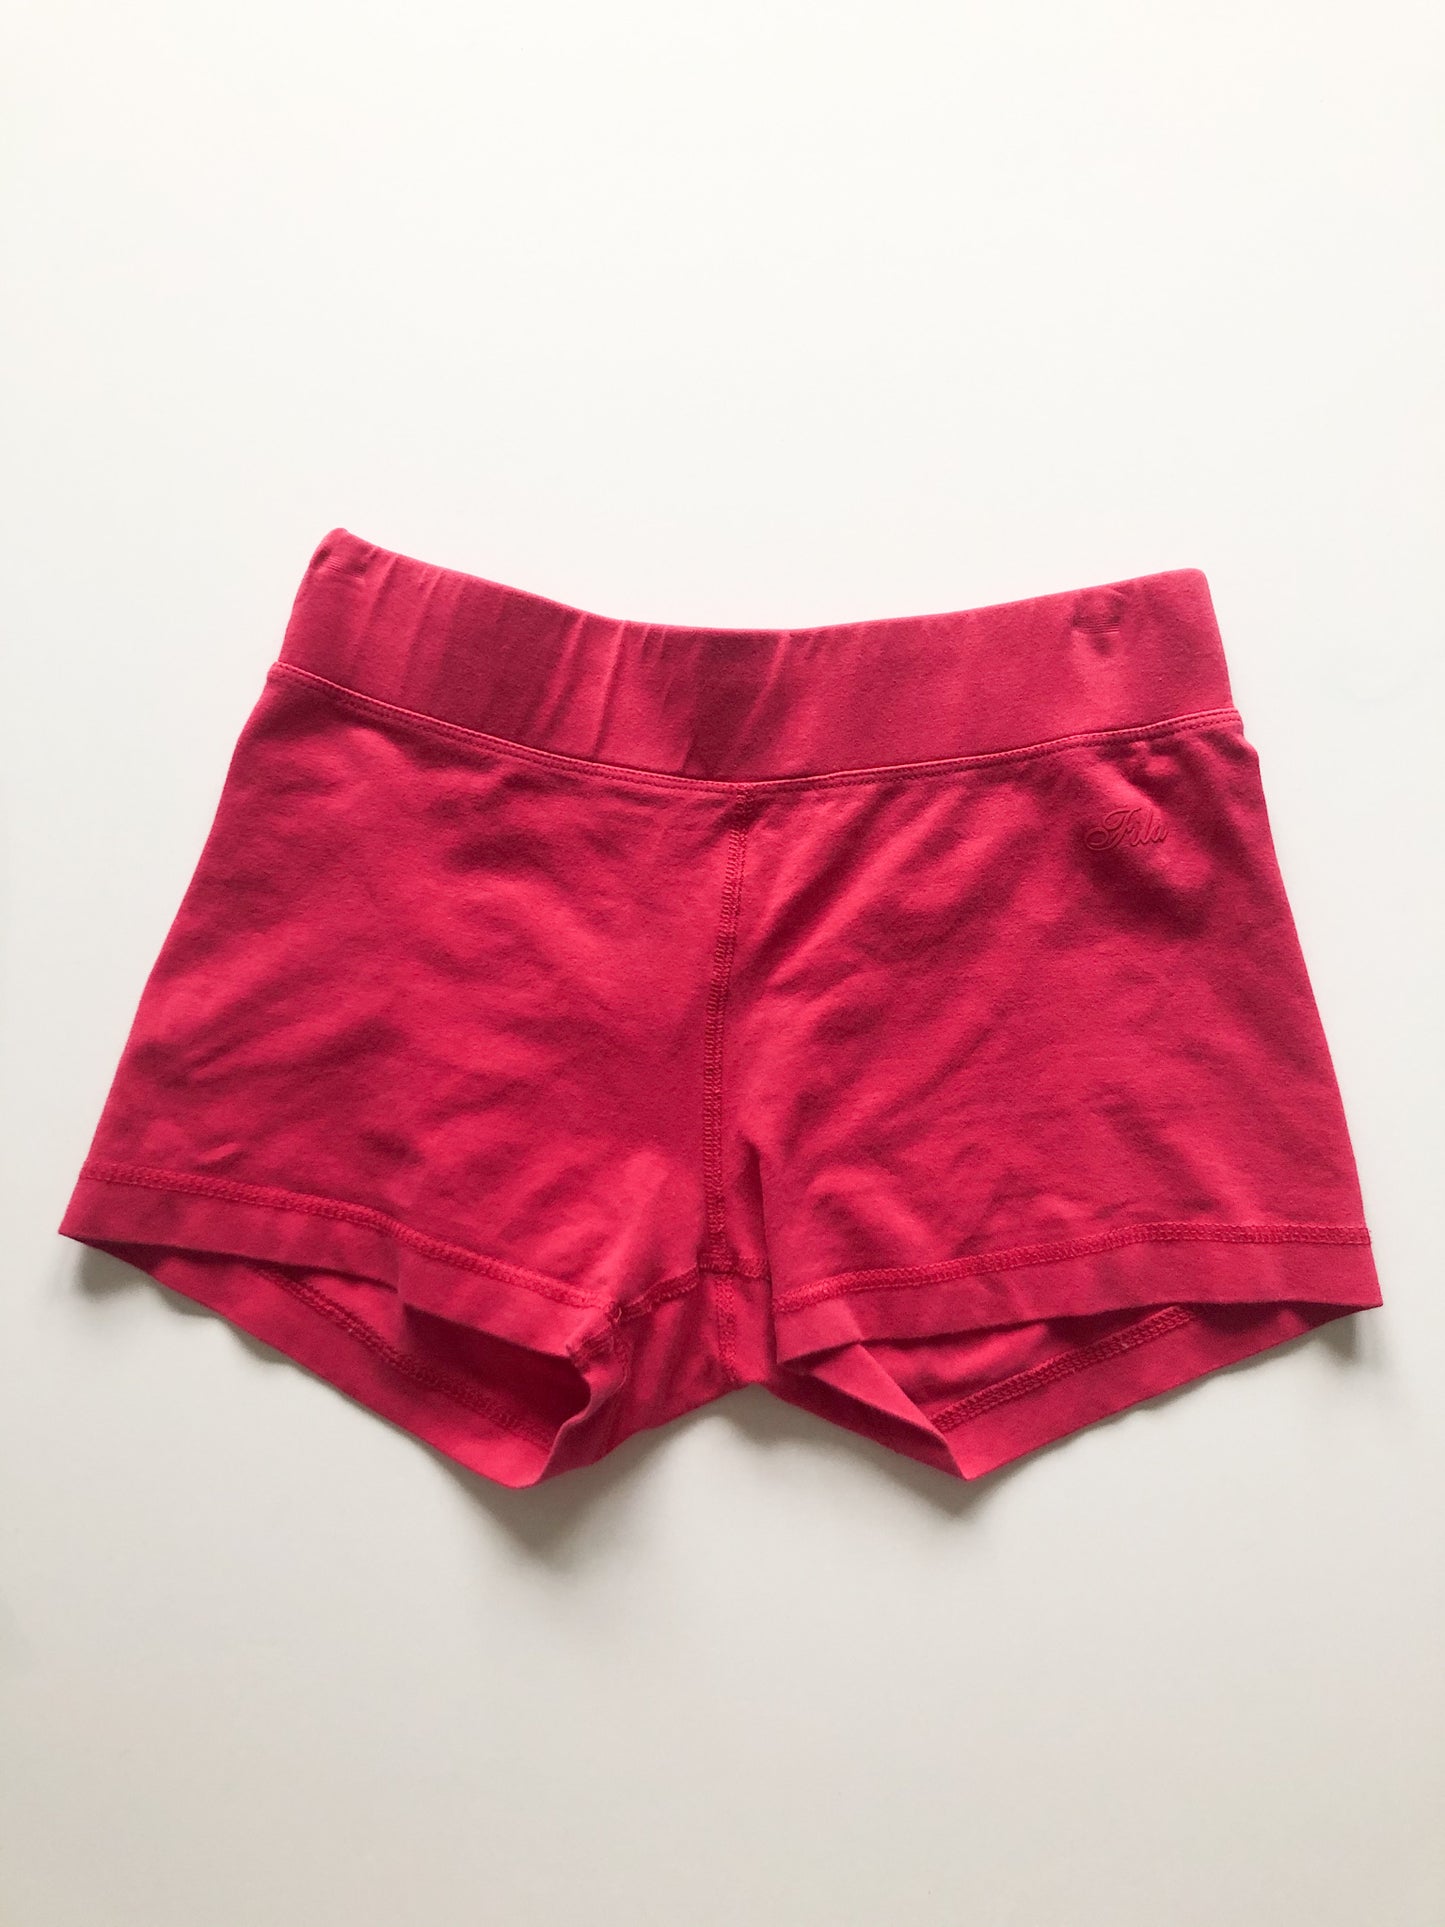 Fila Pink Spandex High Rise Shorts - XS